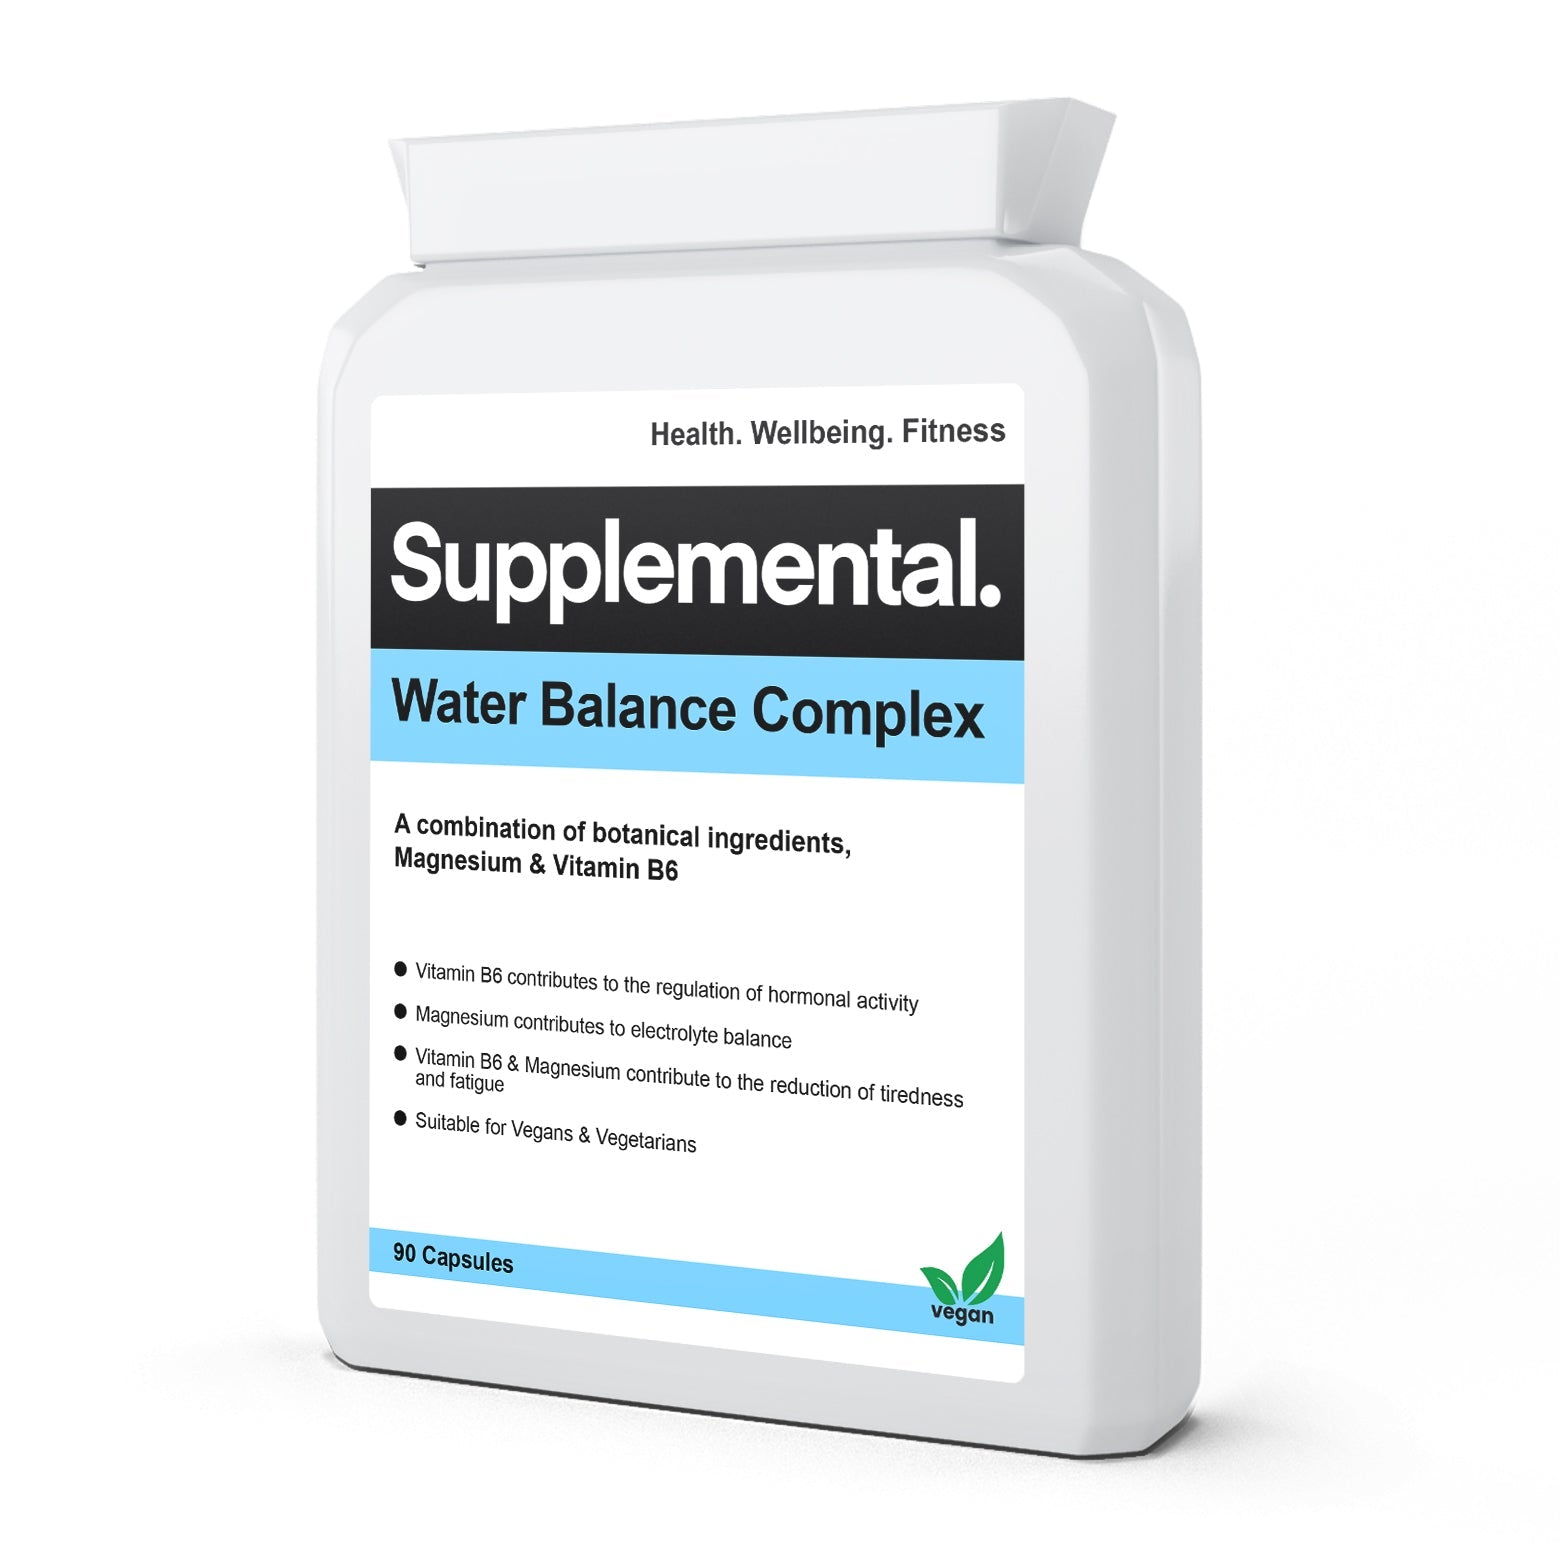 Water Balance Complex - Supplemental